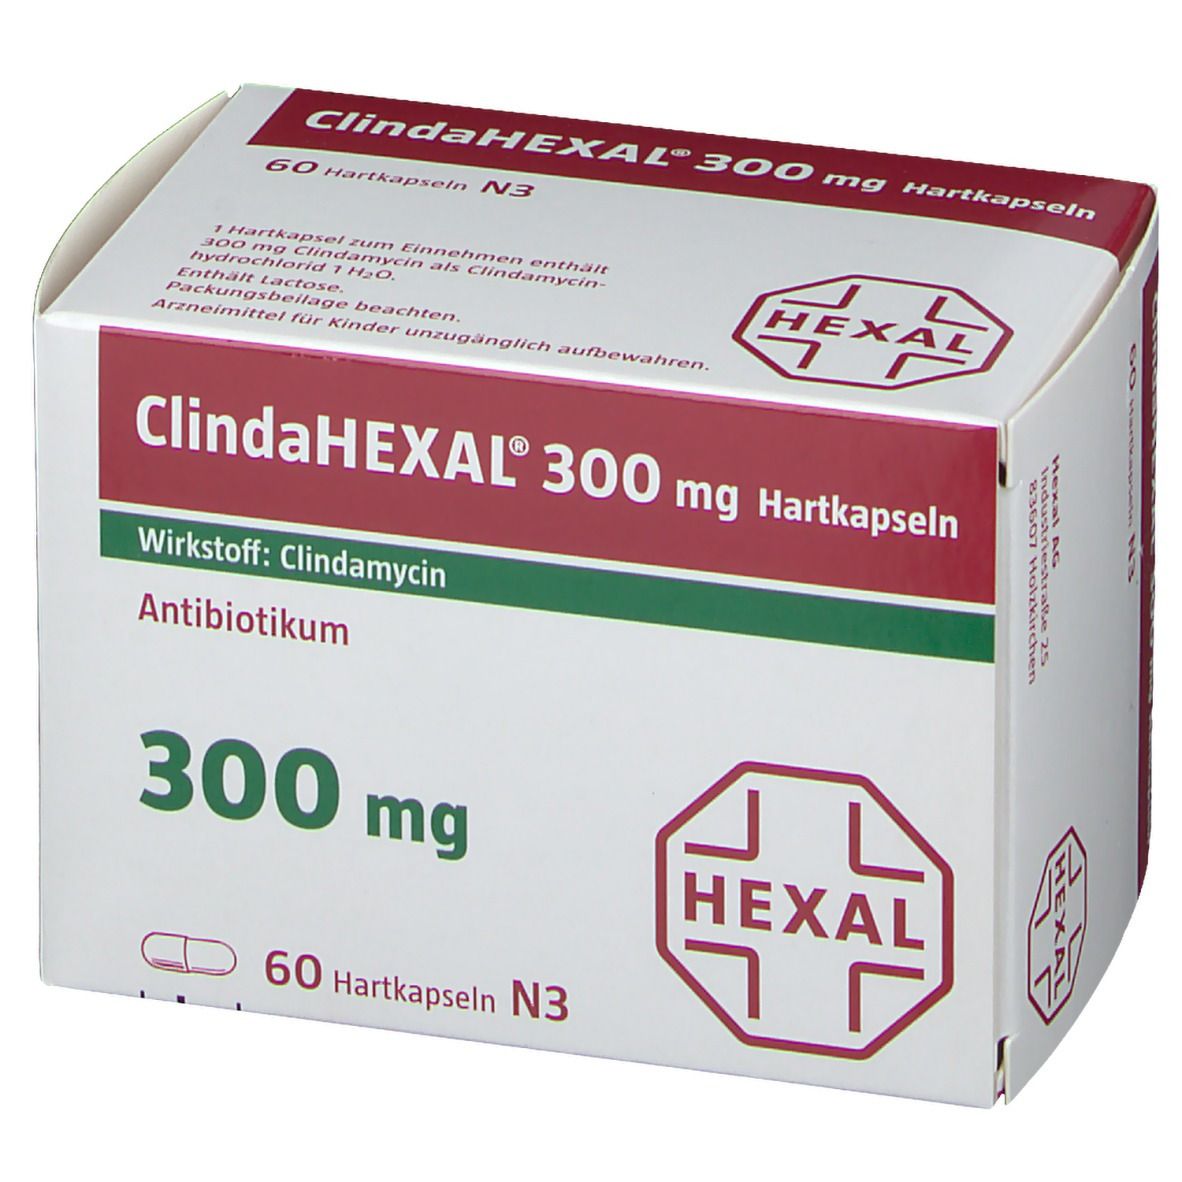 ClindaHEXAL® 300 mg